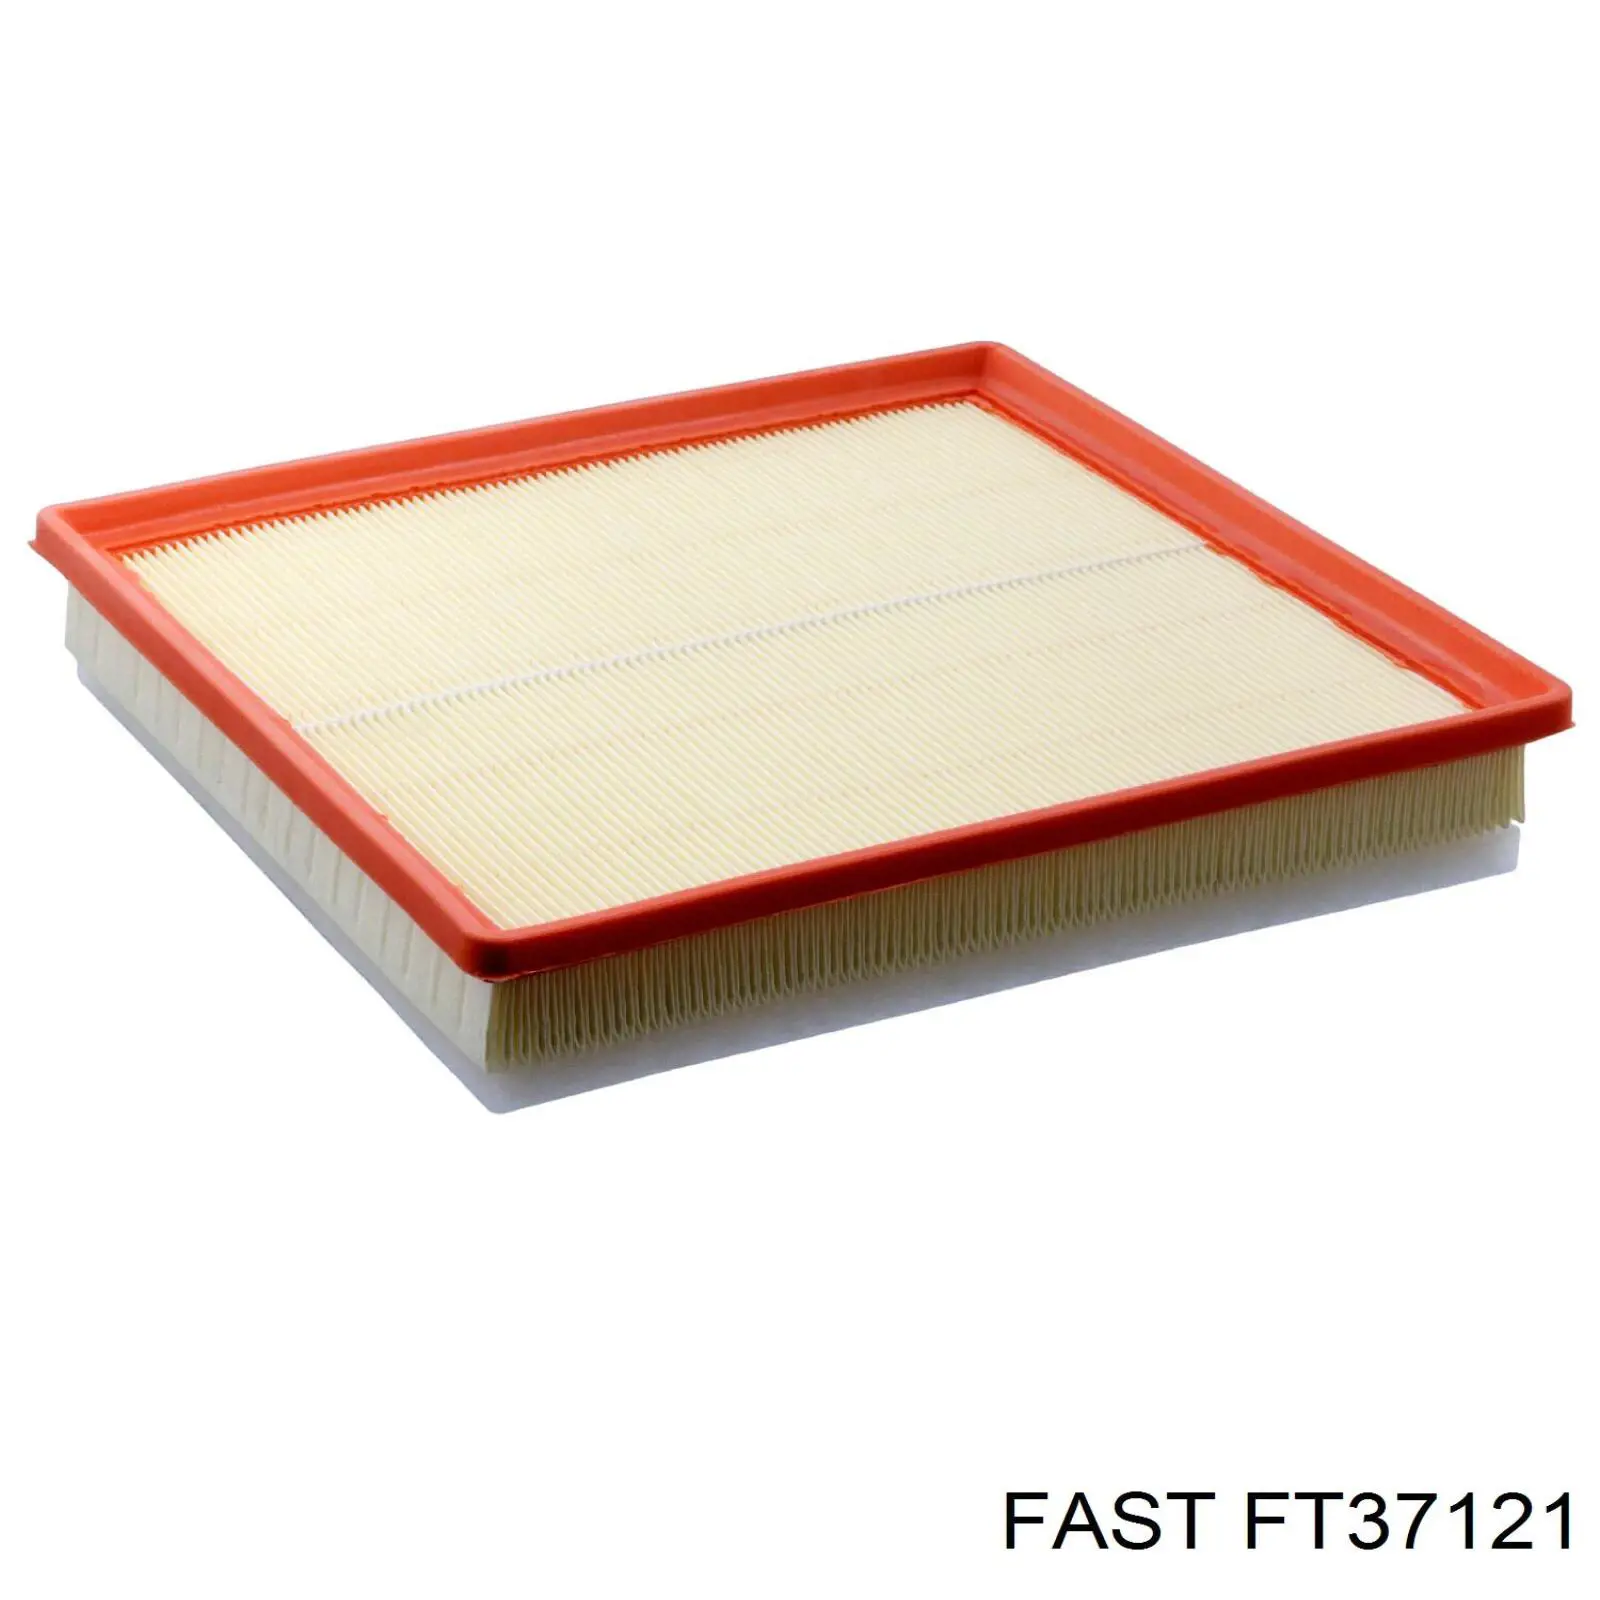 FT37121 Fast filtro de aire